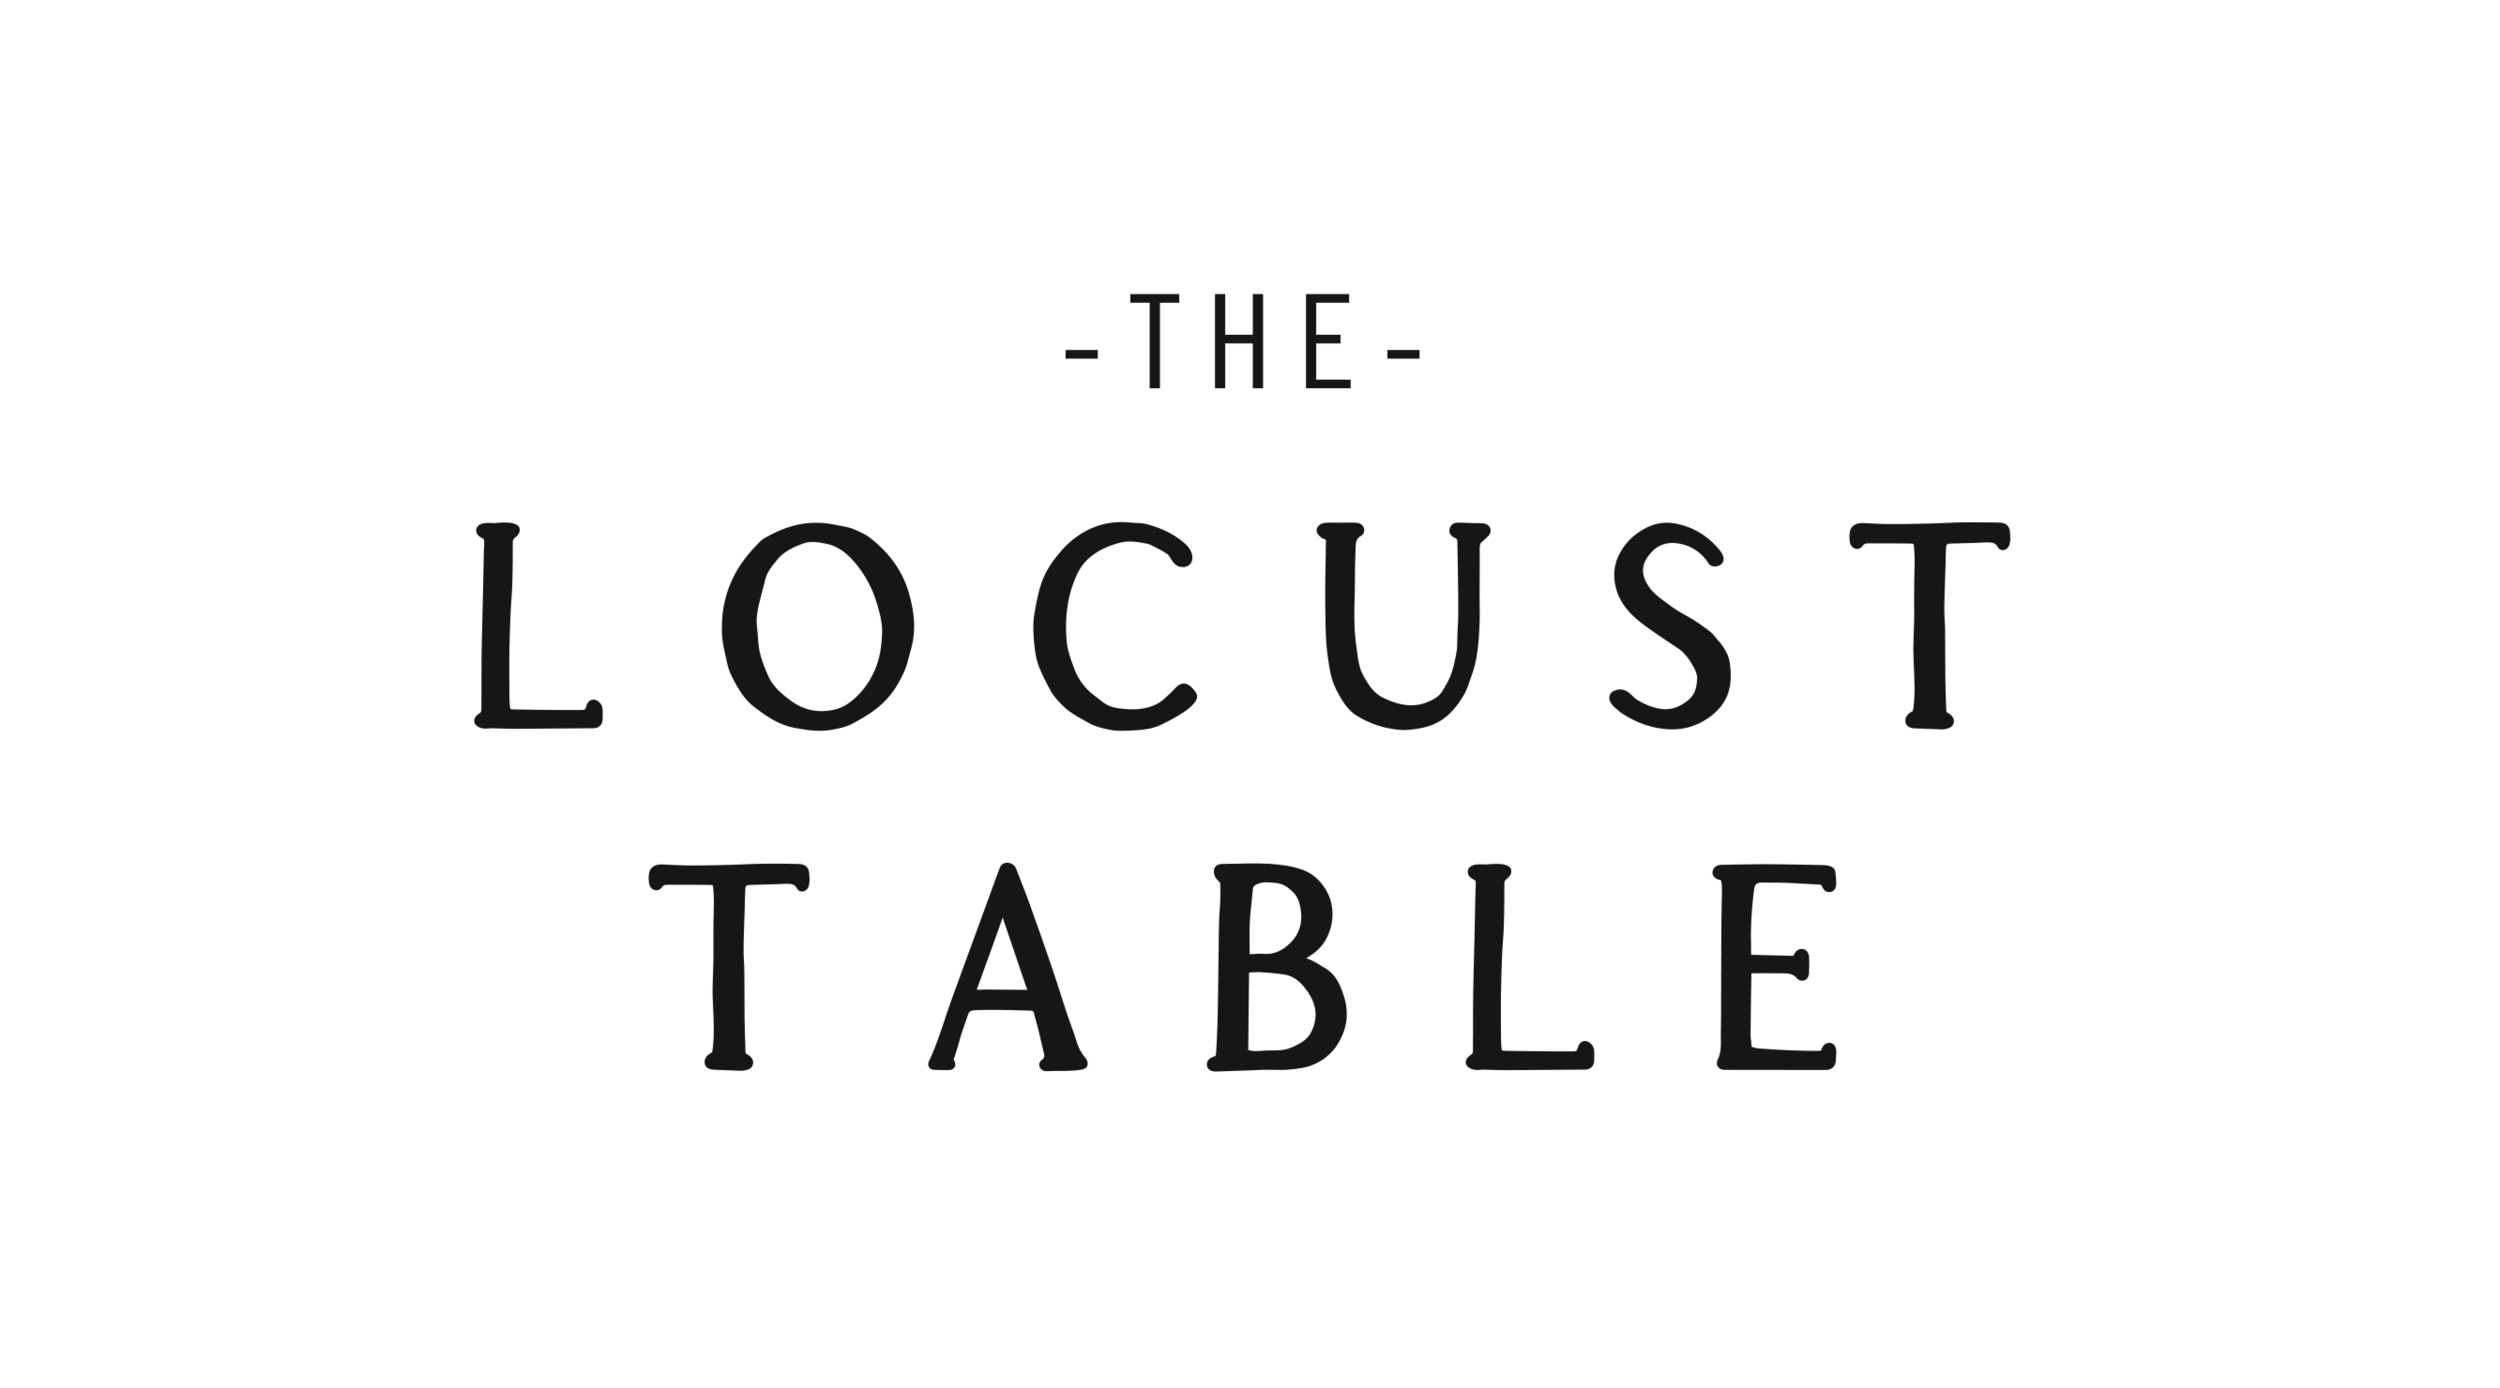 THE LOCUST TABLE